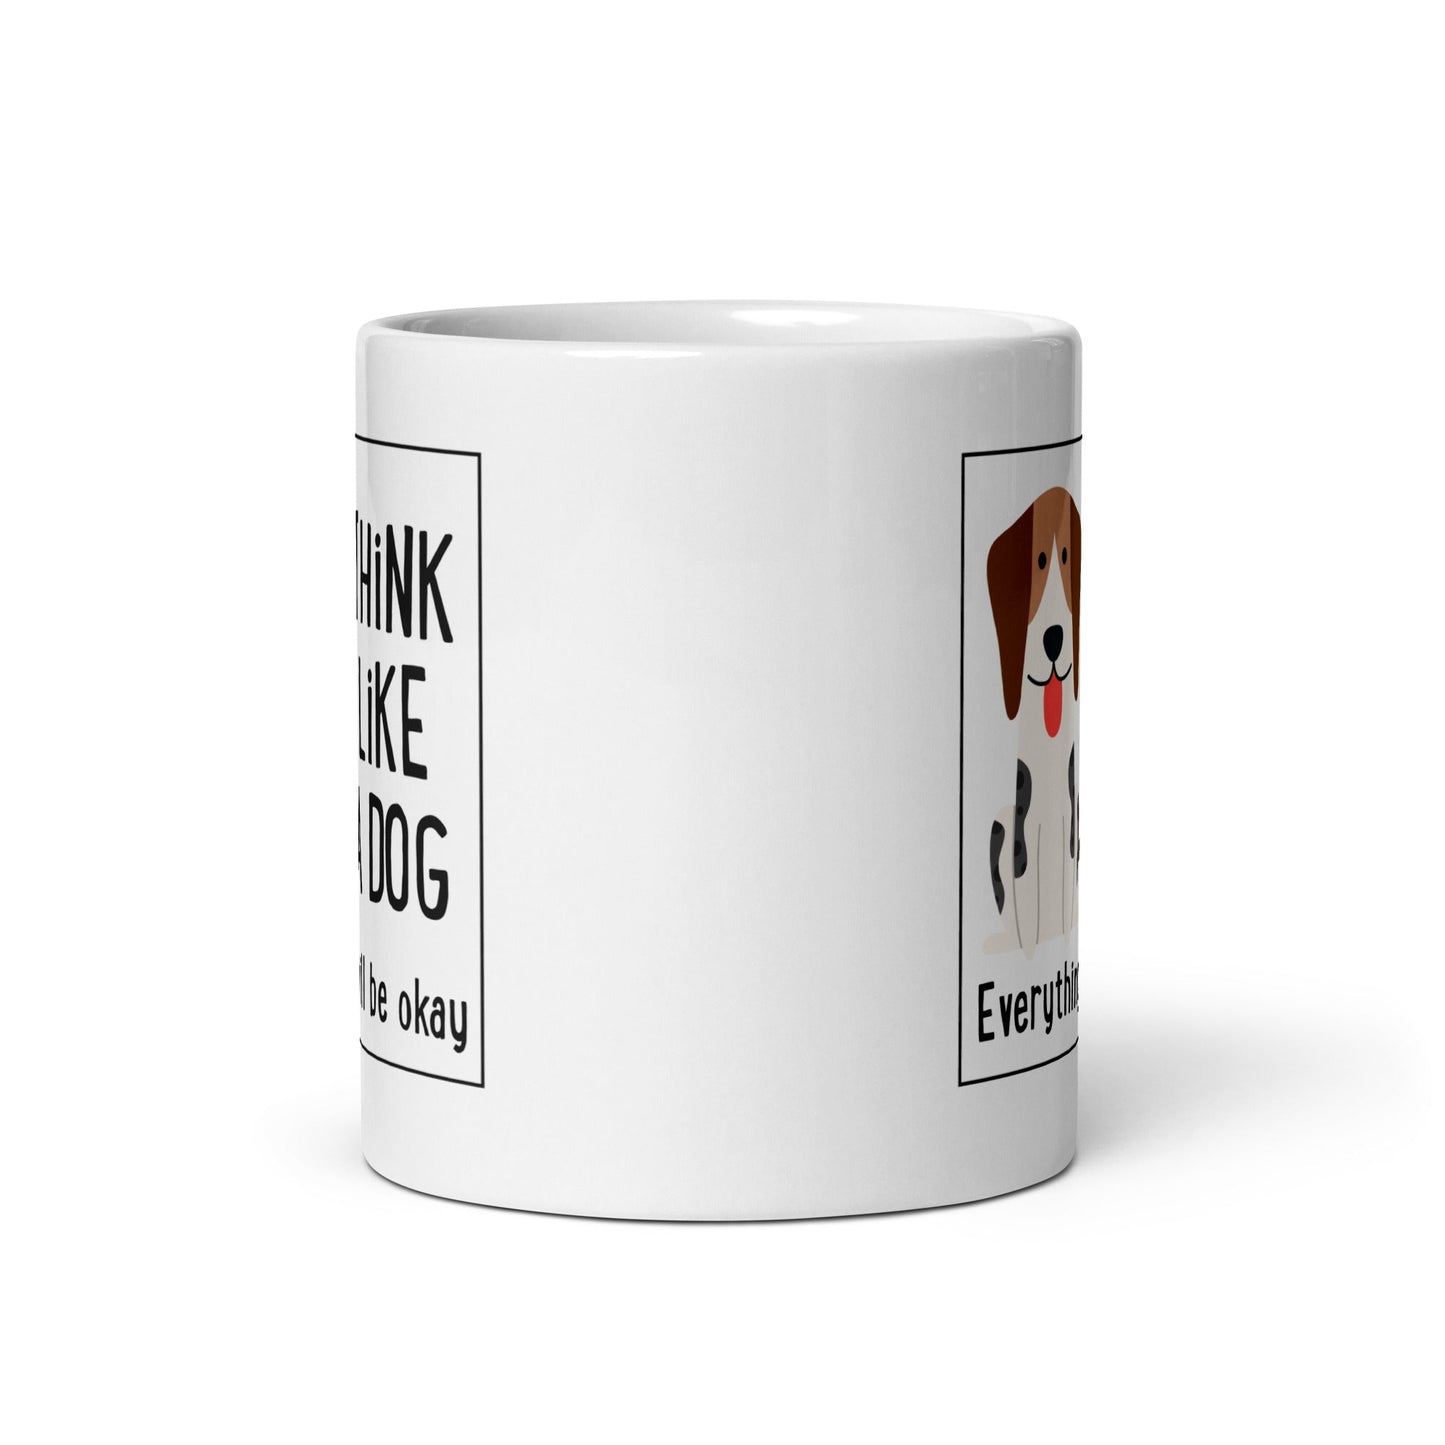 White Glossy Mug - Original - Everything Will Be Okay - THiNK LiKE A DOG®